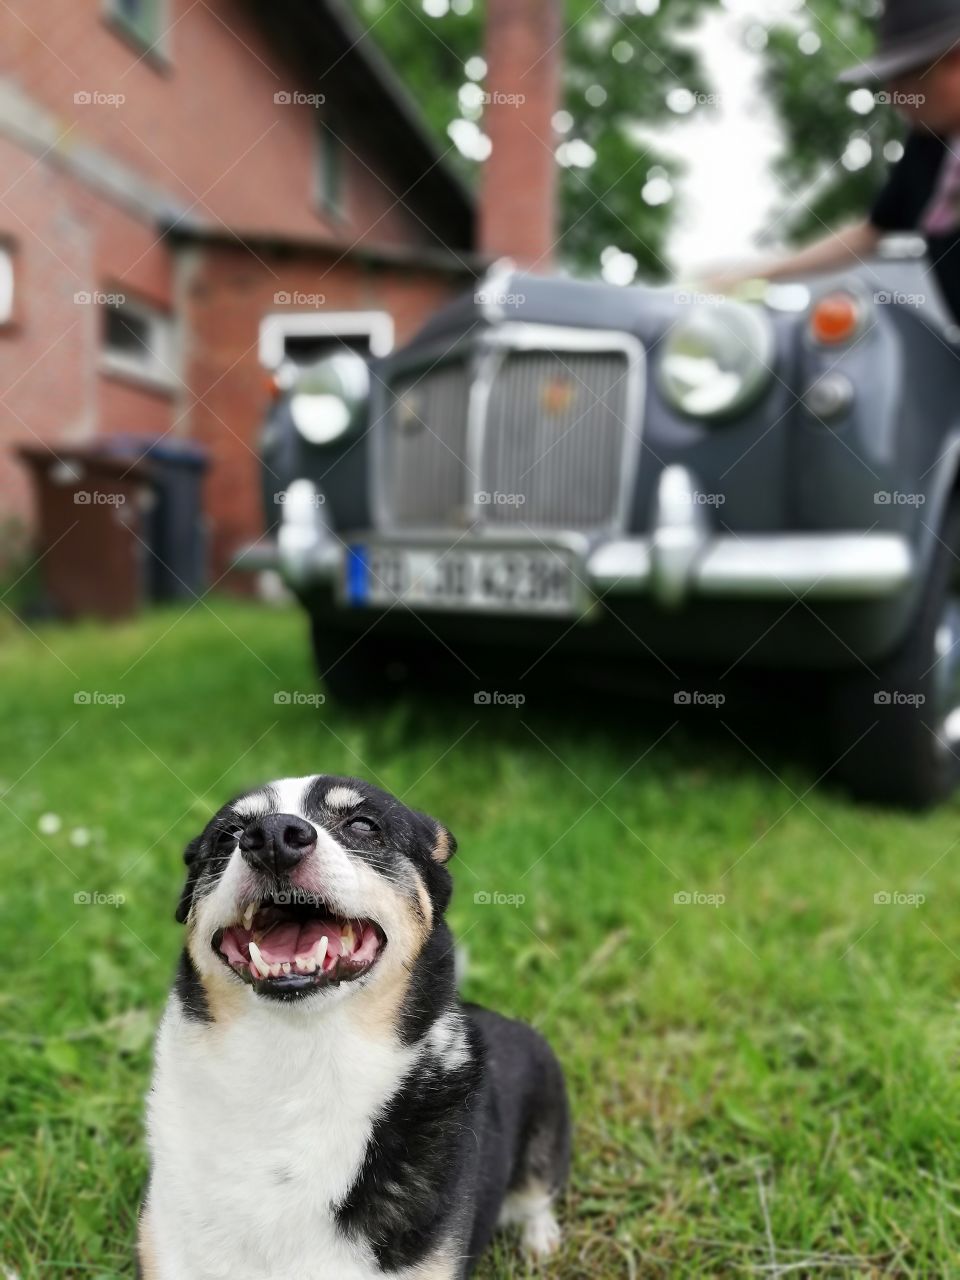 Little dog smiling in front oh an oldtimer car